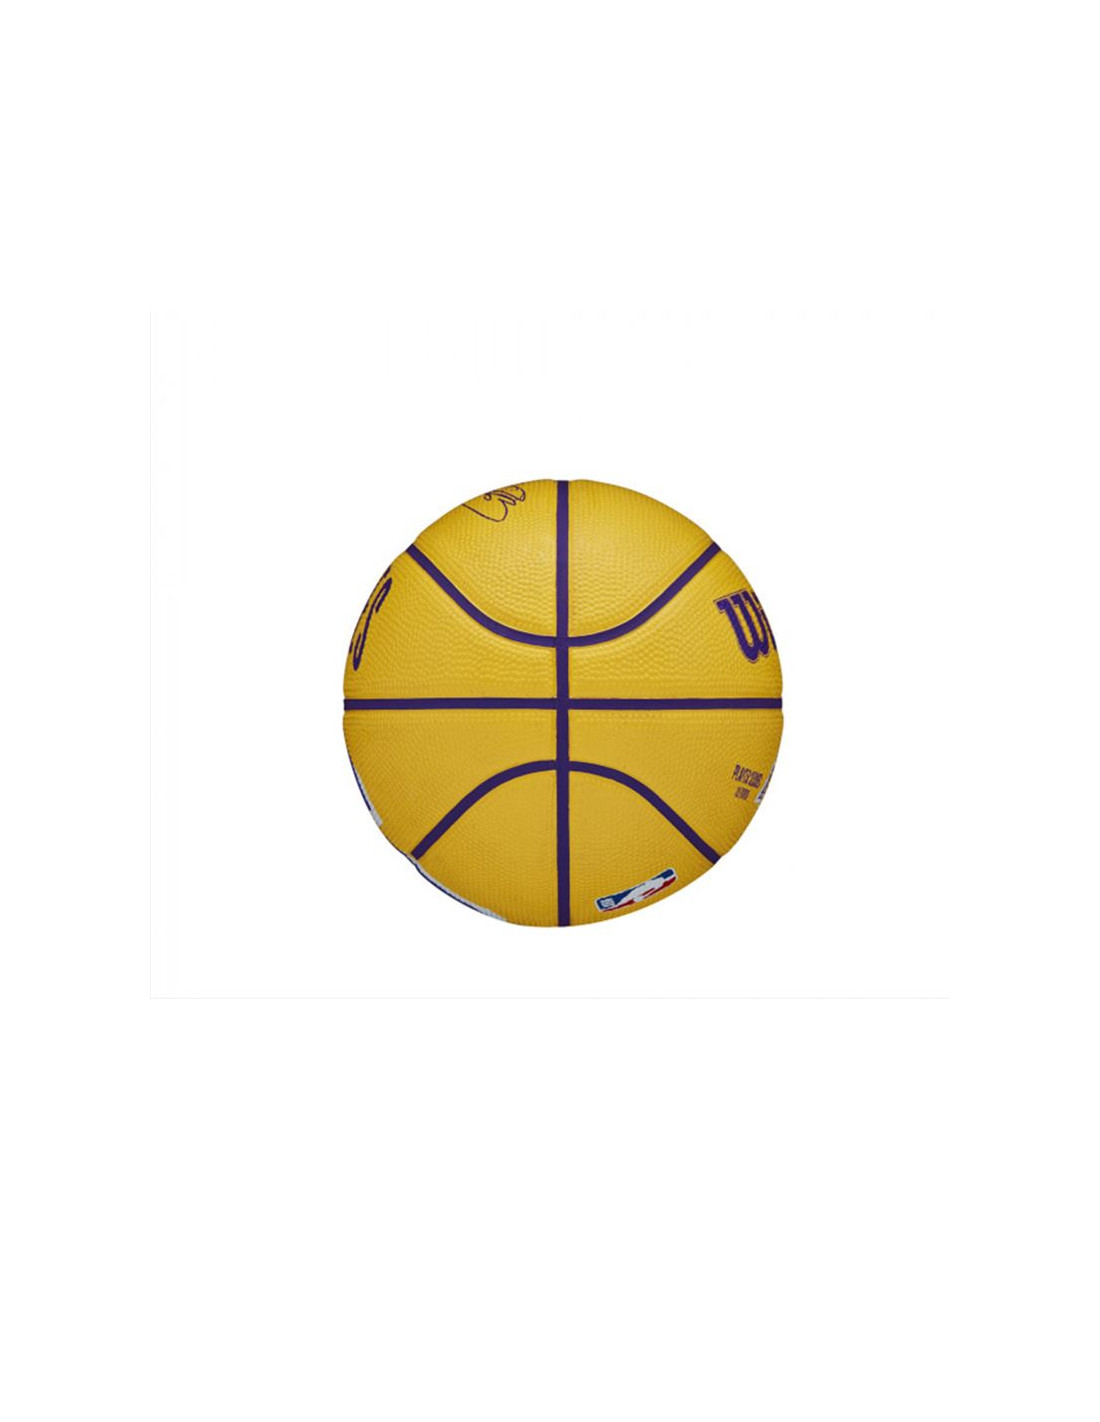 ▷ Manomètre NBA Wilson - Accessoires Ballons de Basket